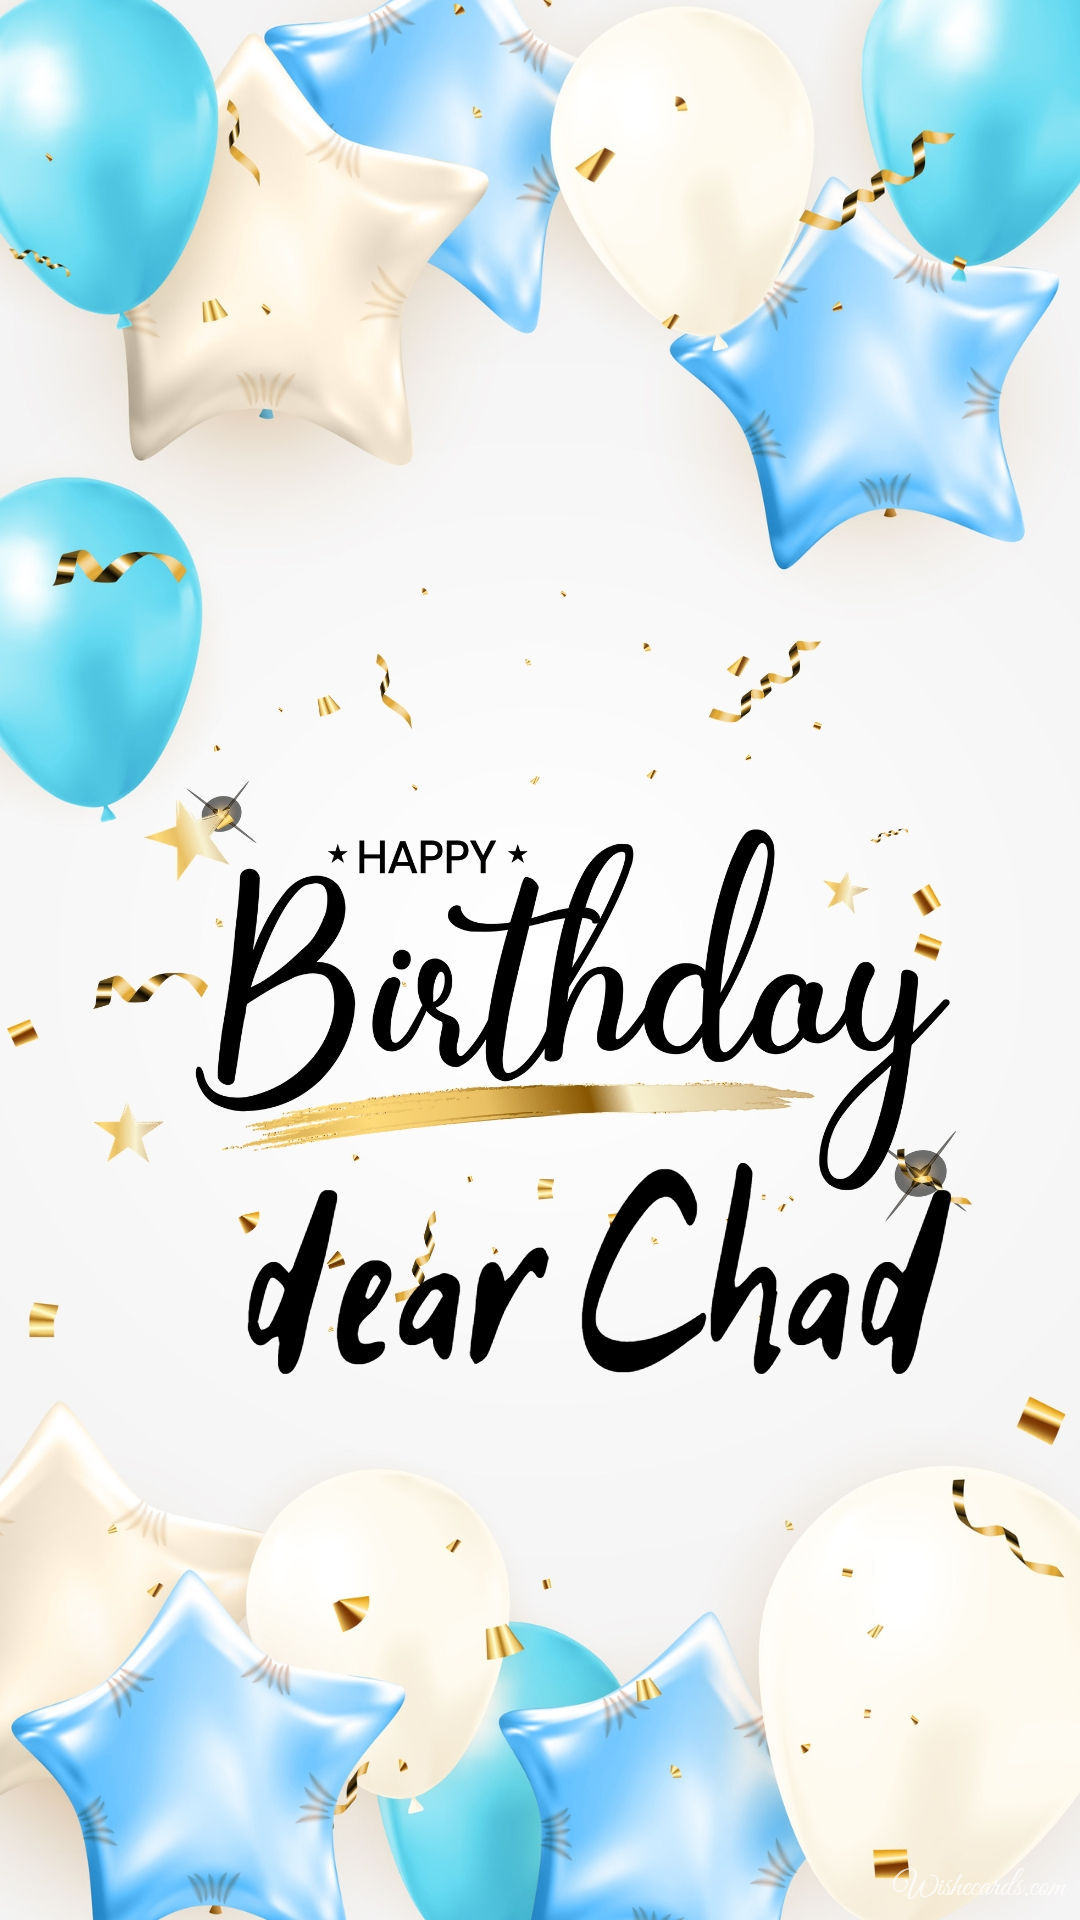 Happy Birthday Chad